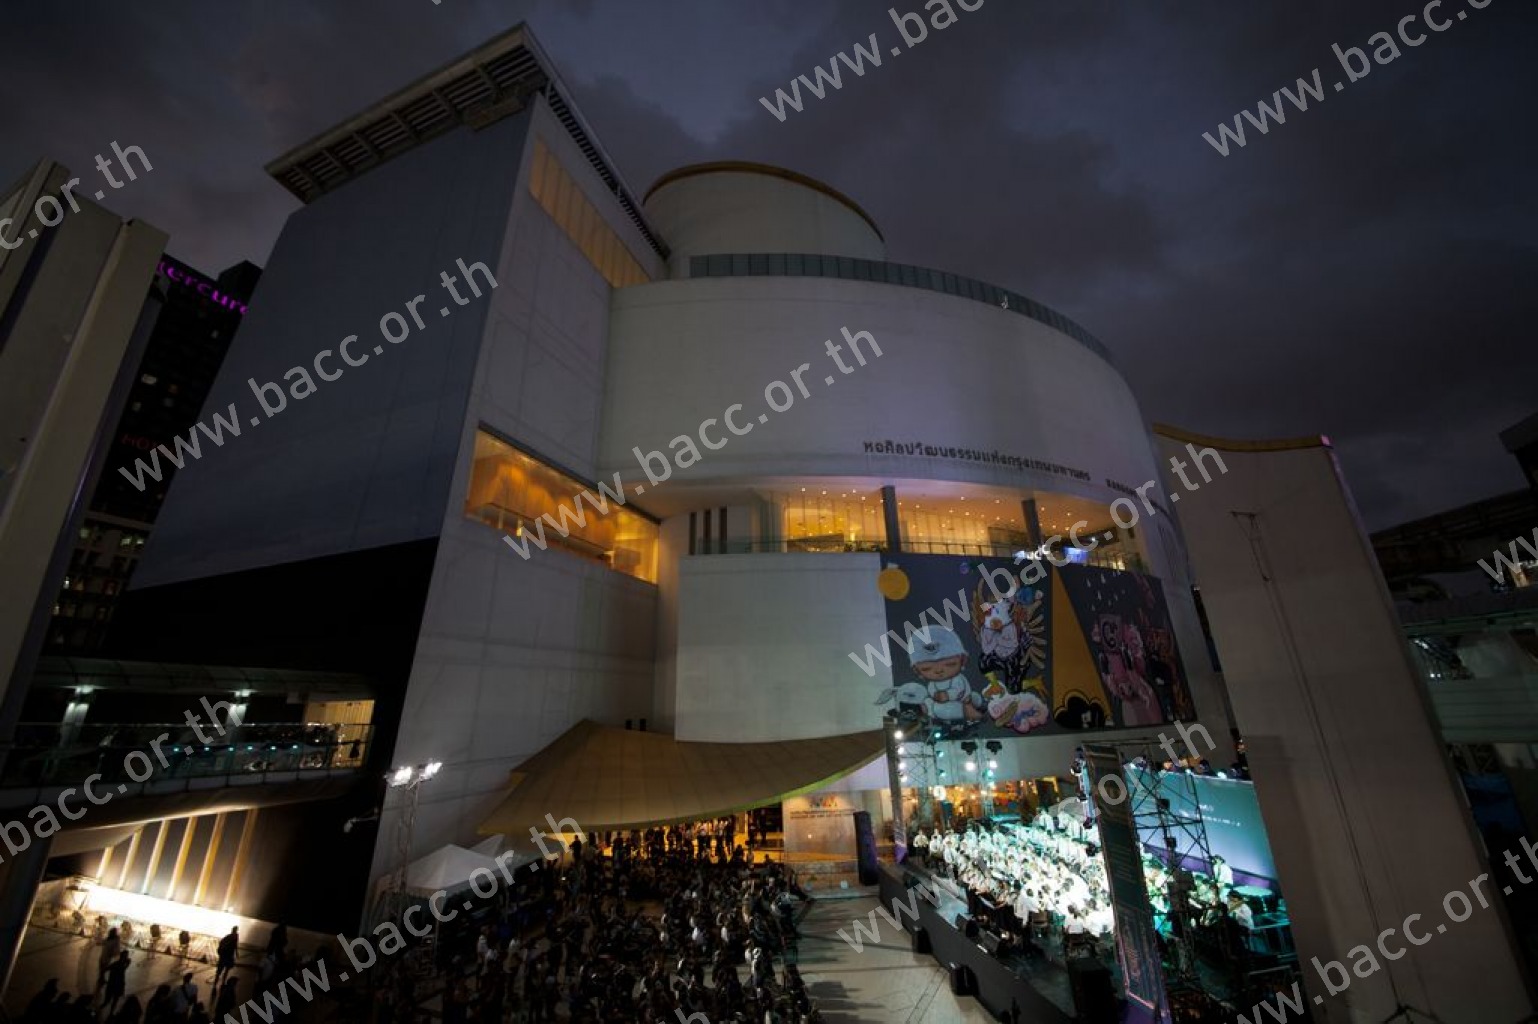 Tribute to His Majesty King Bhumibol Adulyadej Concert